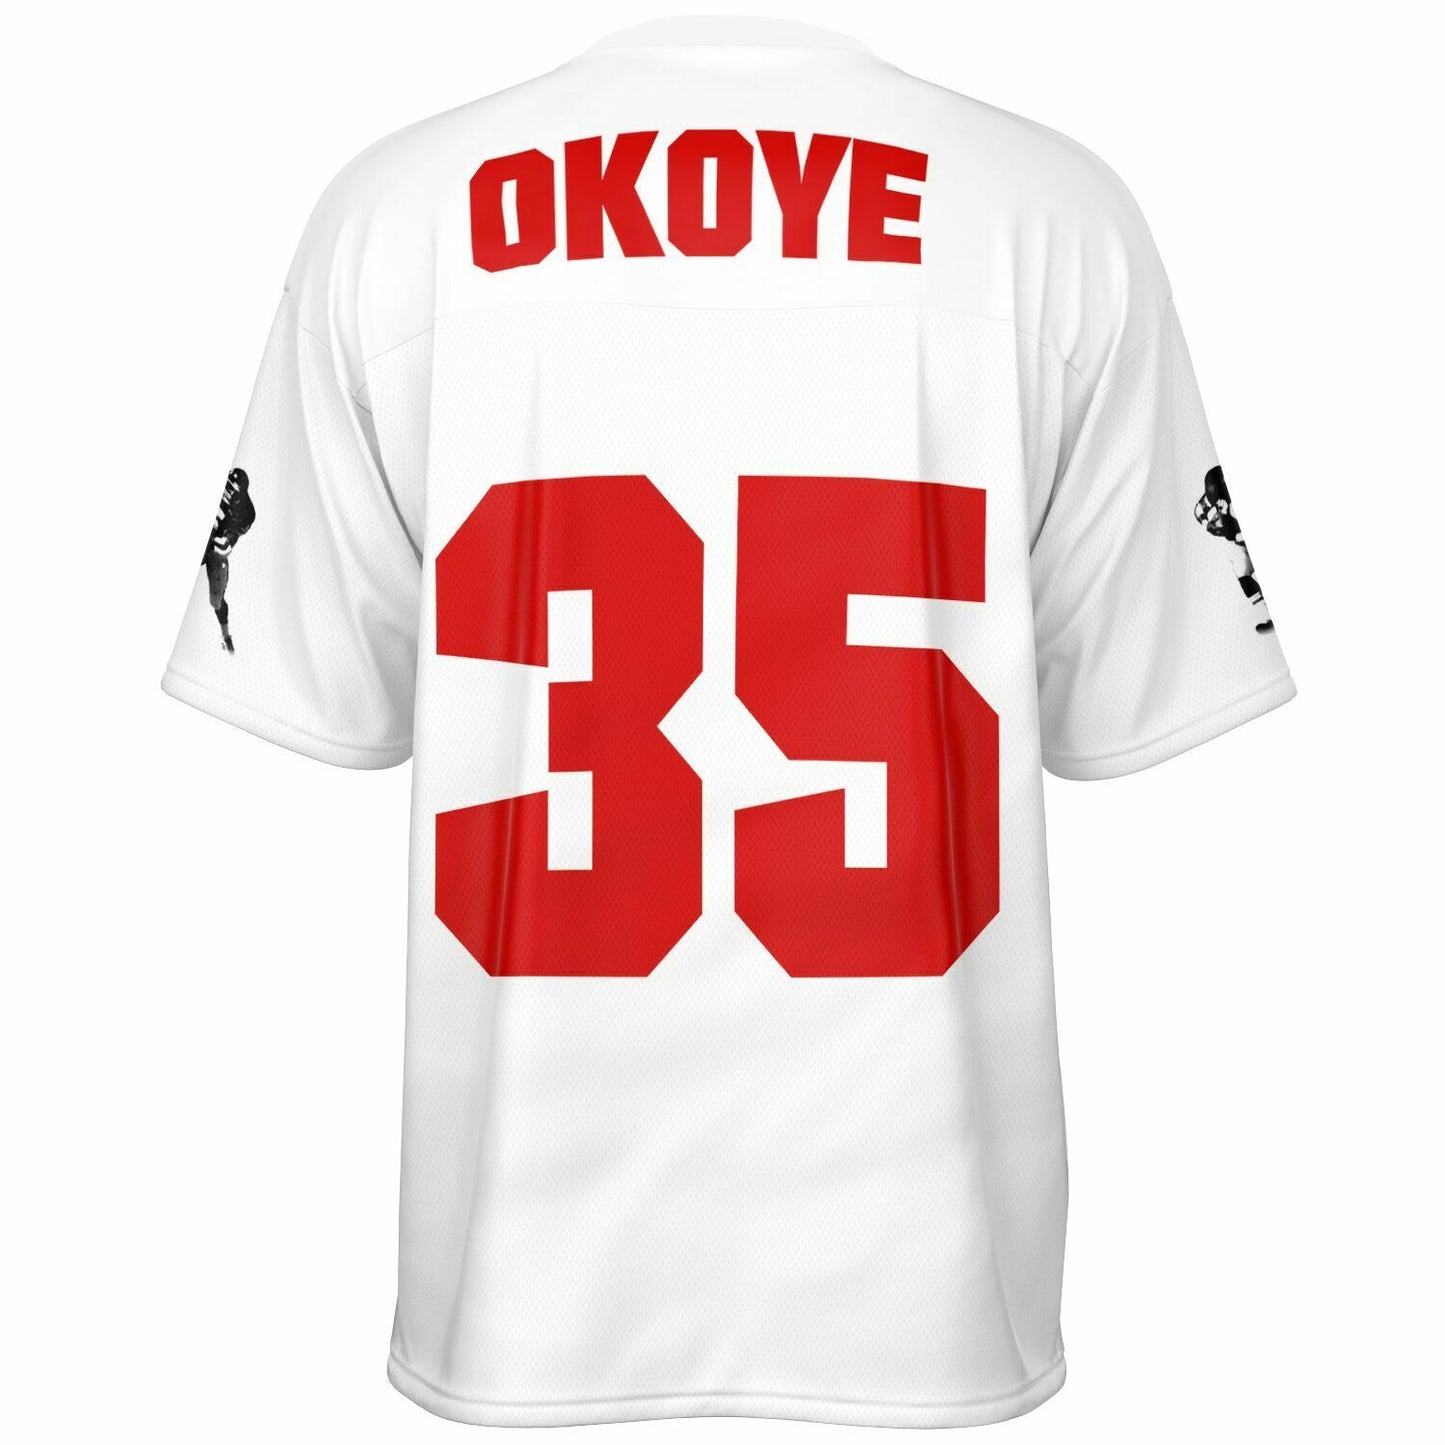 GT Okoye Football Jersey